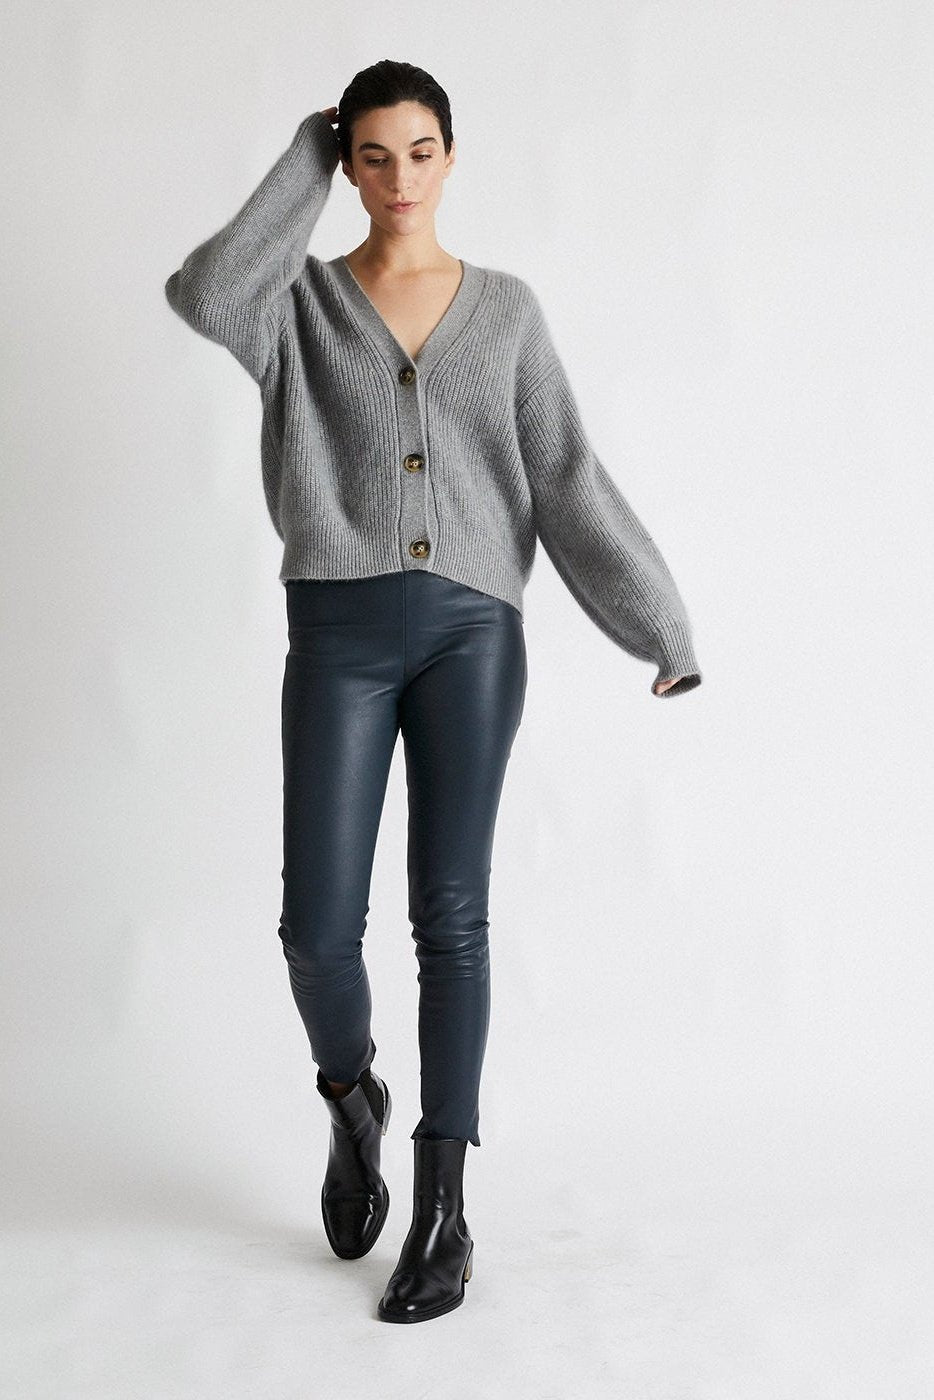 + Beryll Cashmere Cardigan Sweater | Pebble Gray - +Beryll Cashmere Cardigan Sweater | Pebble Gray - +Beryll Worn By Good People